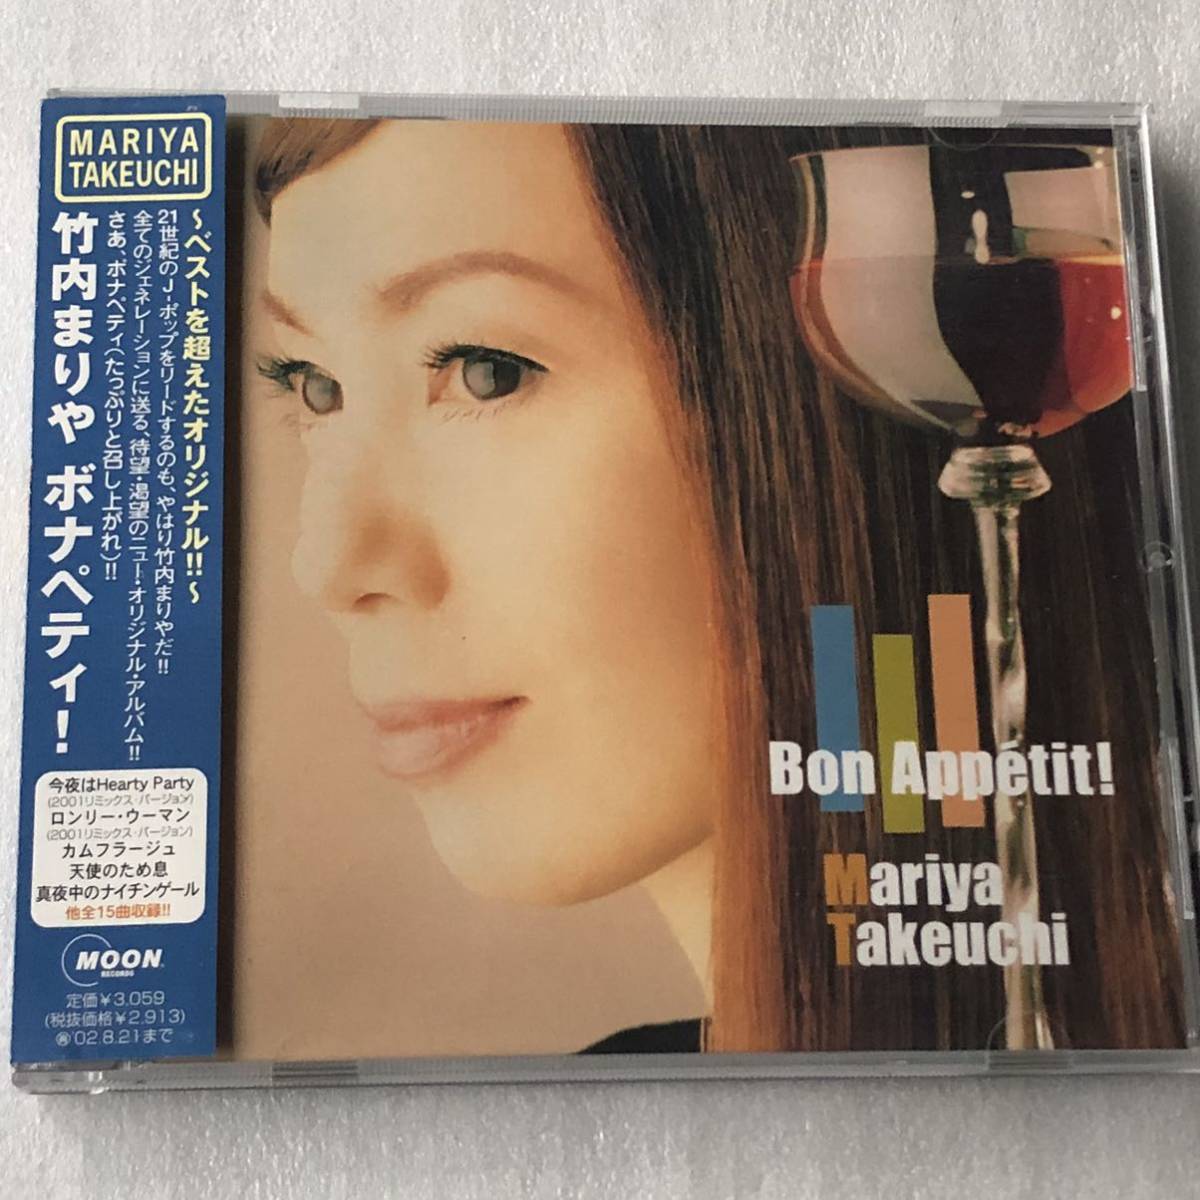  б/у CD Takeuchi Mariya /Bon Appetit!bonapeti(2001 год )